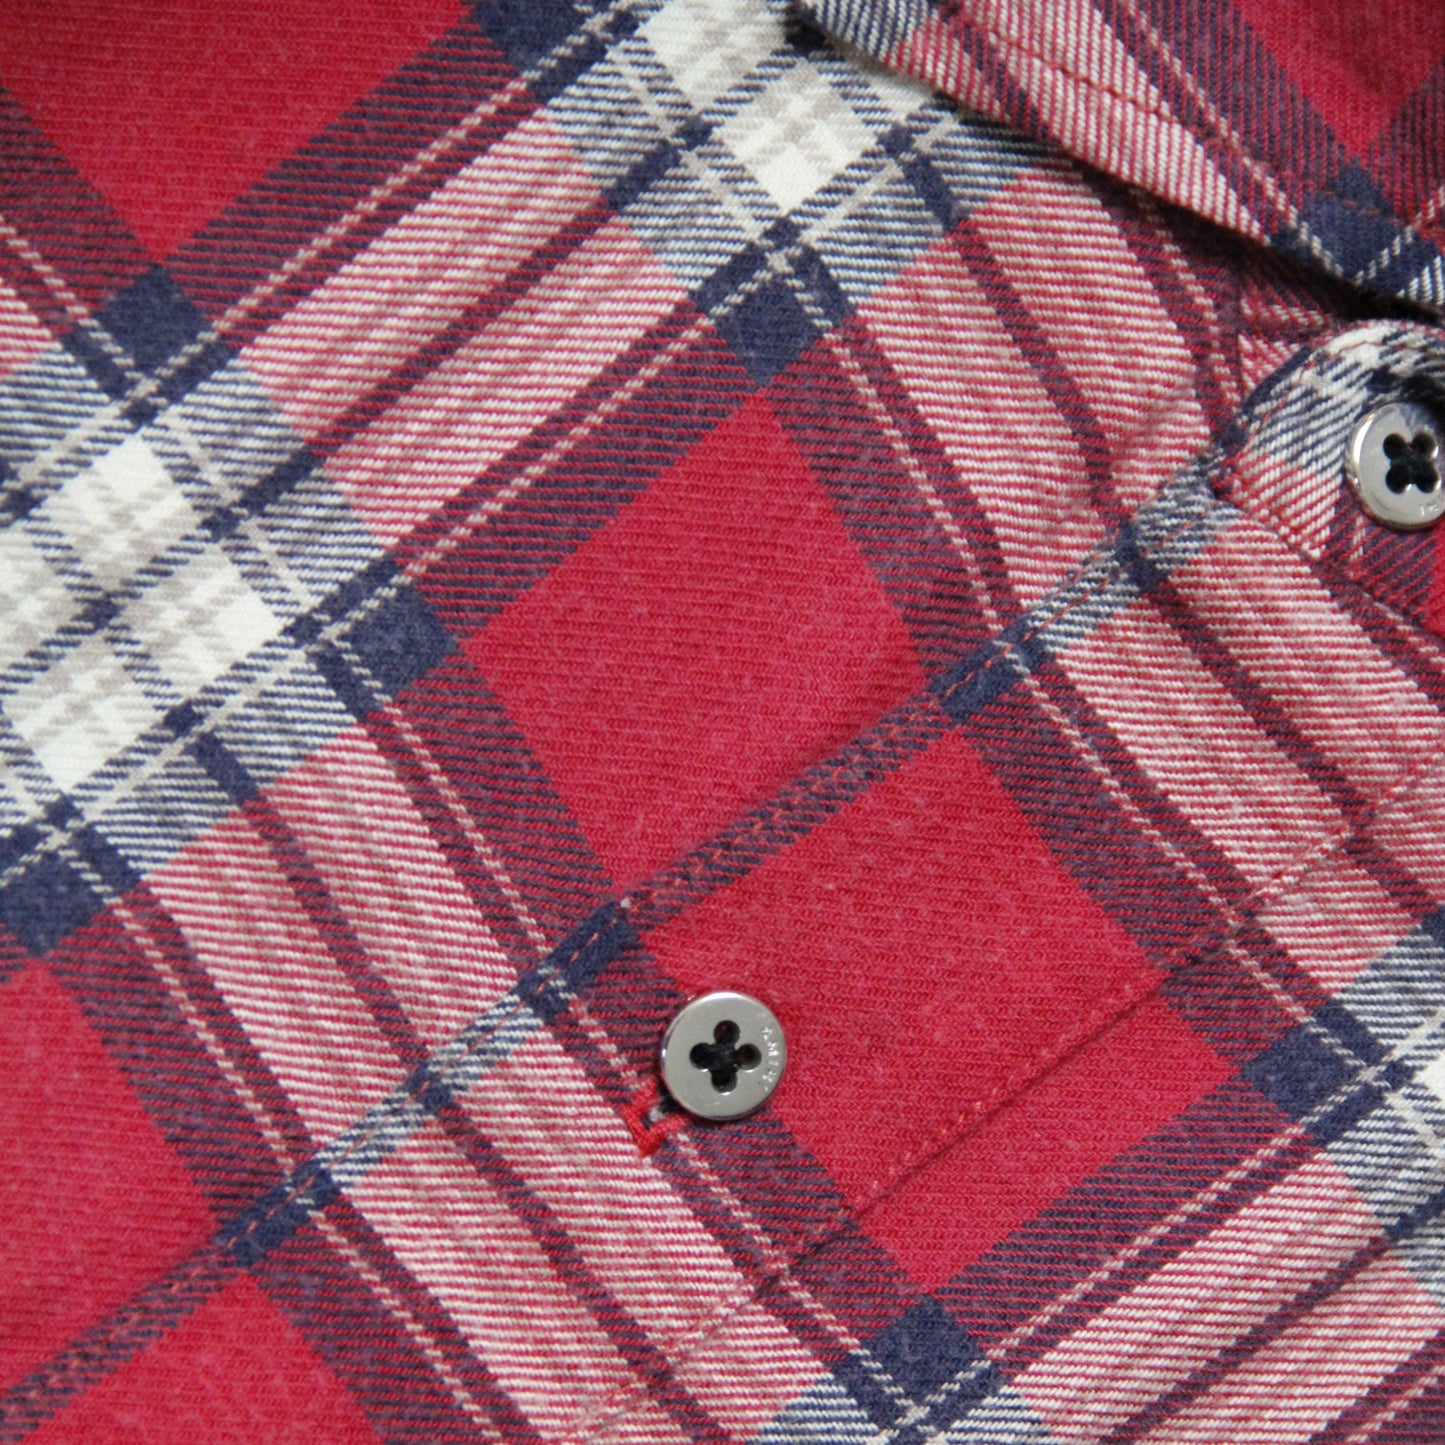 Amiri Distressed Flannel Lumberjack Shirt 